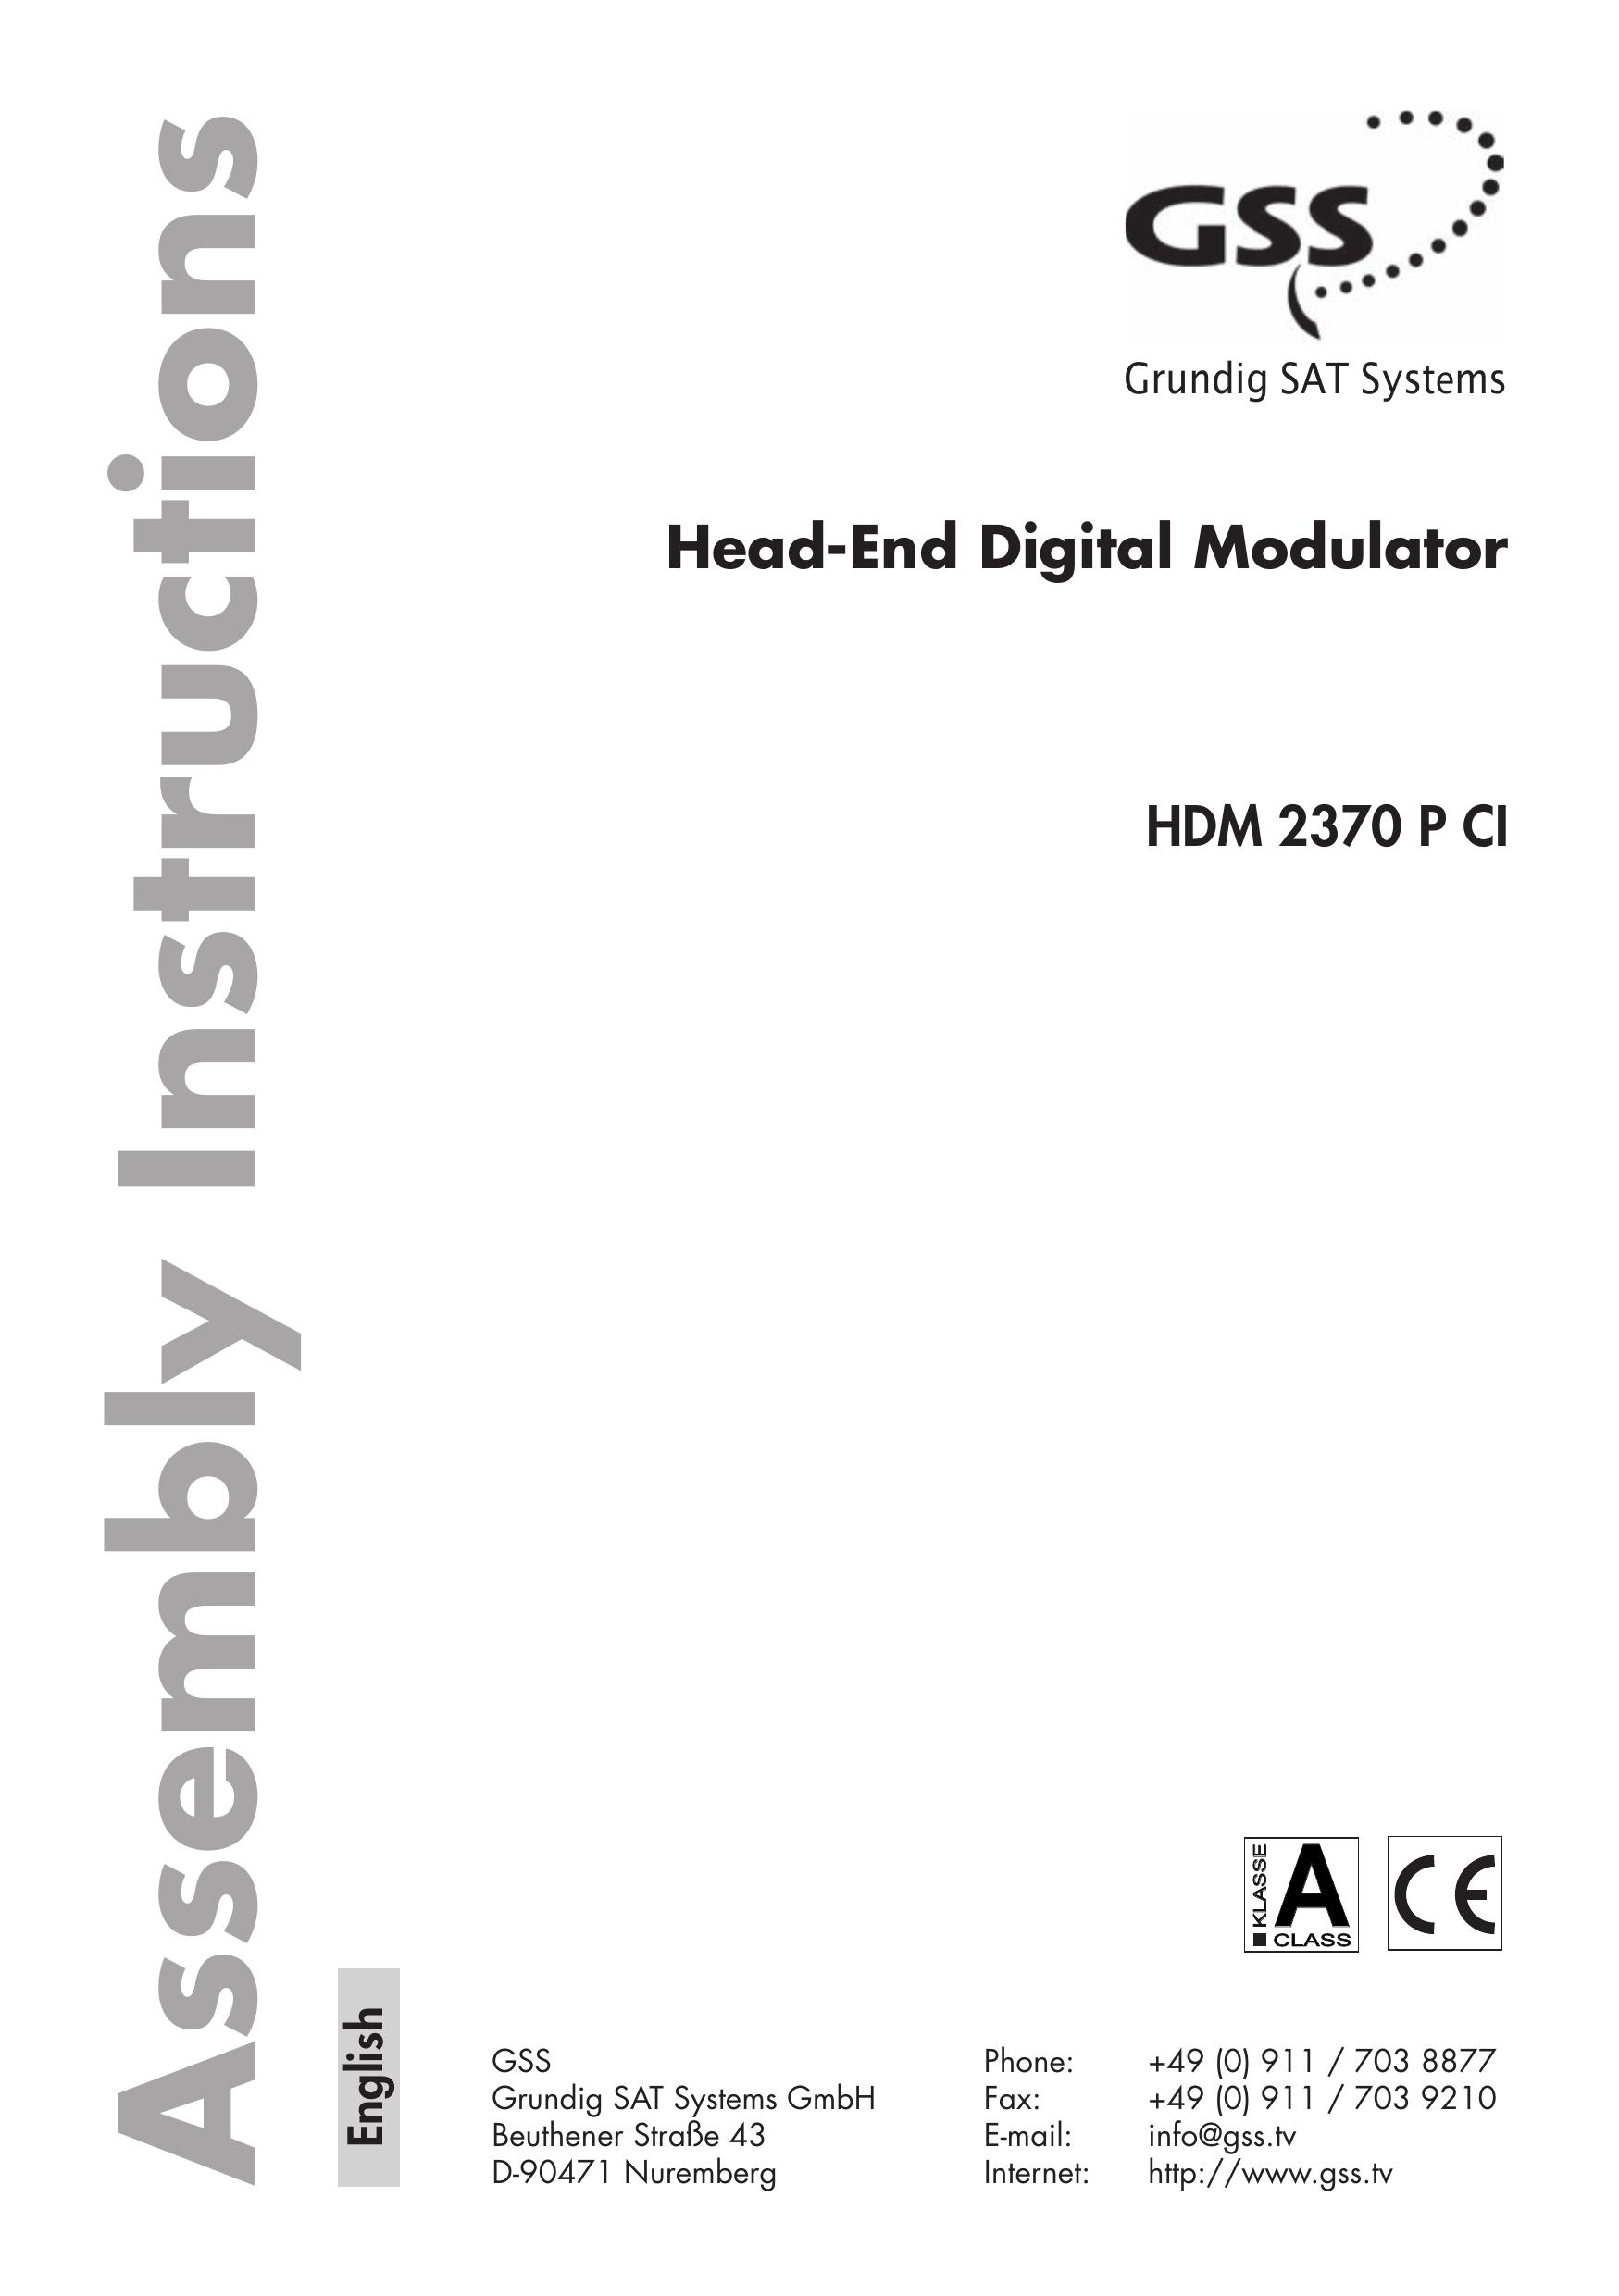 Grundig HDM 2370 P CI Refrigerator User Manual